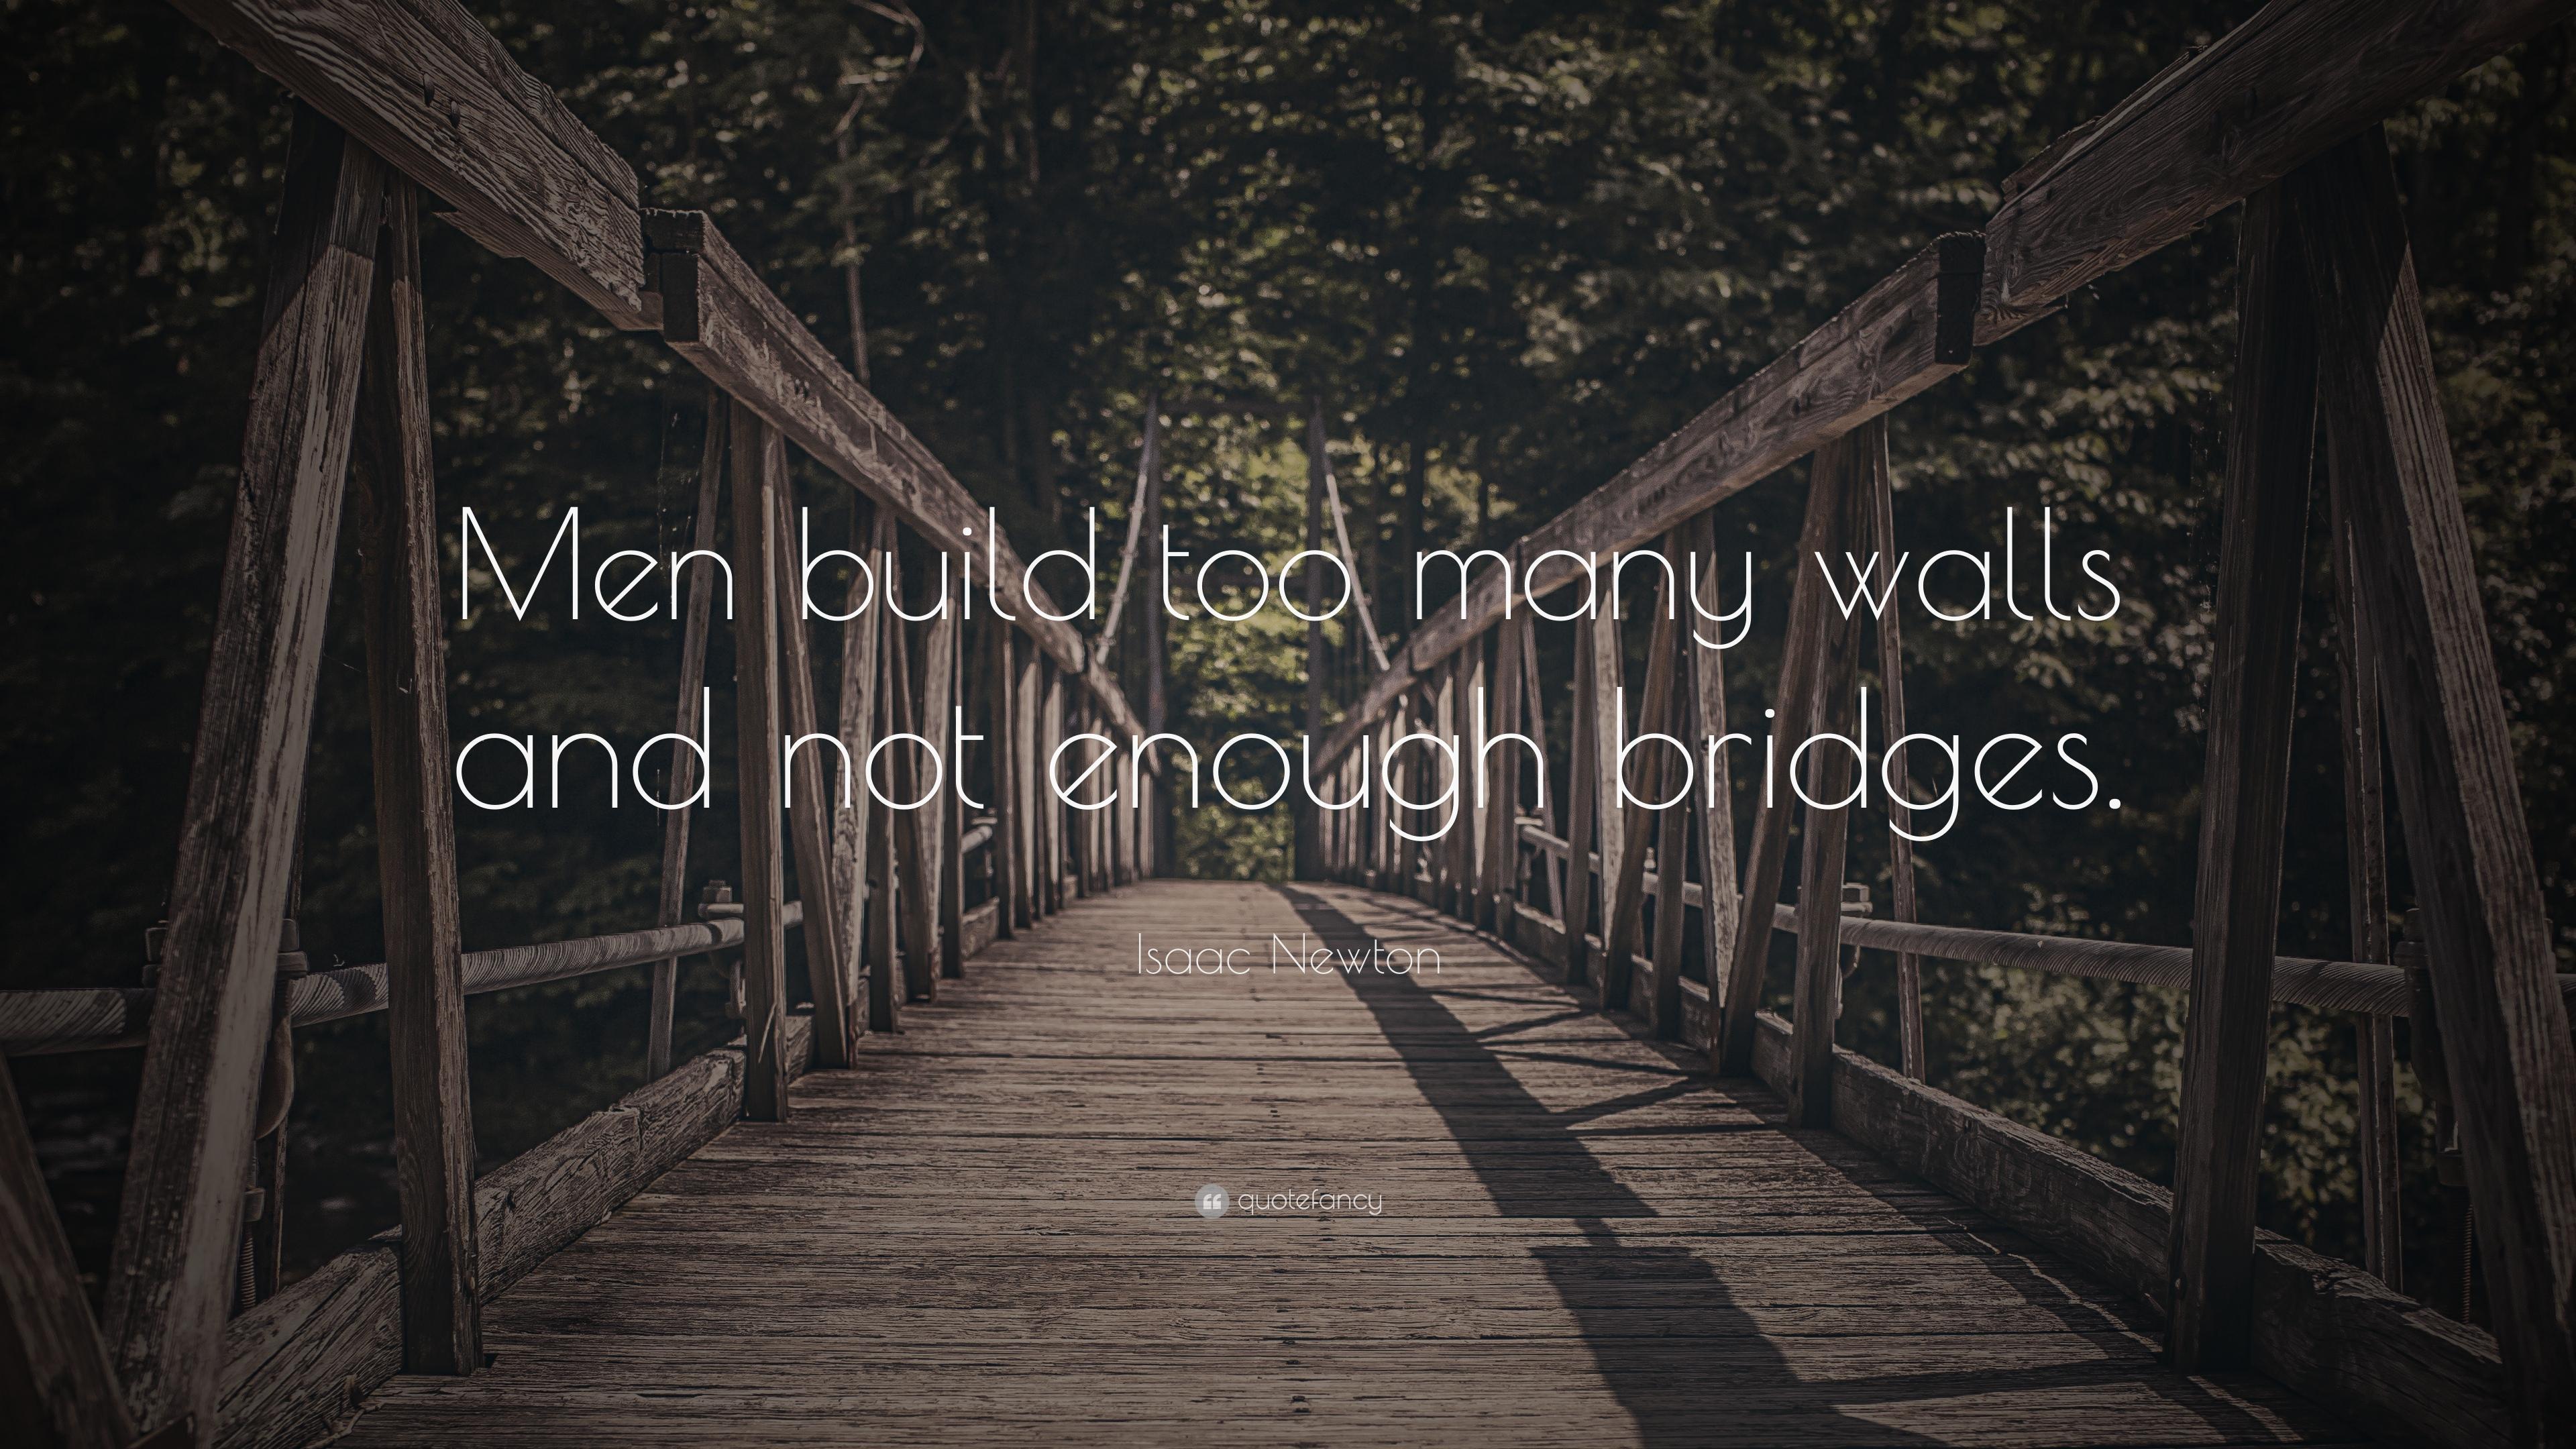 Isaac Newton Quote: “Men build too many walls and not enough bridges